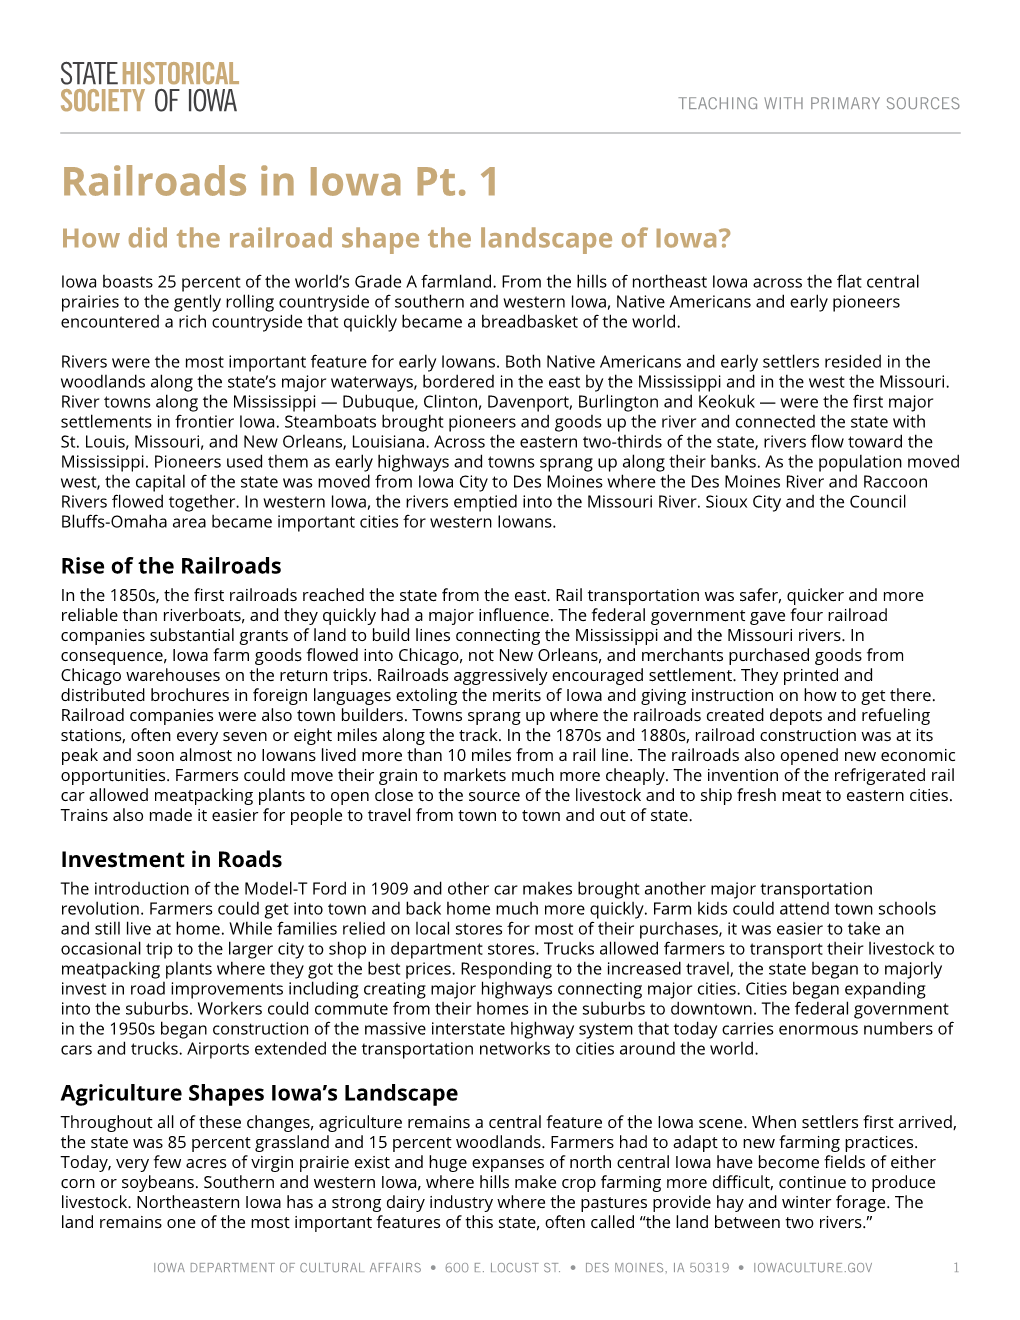 Railroads in Iowa Pt. 1 How Did the Railroad Shape the Landscape of Iowa?